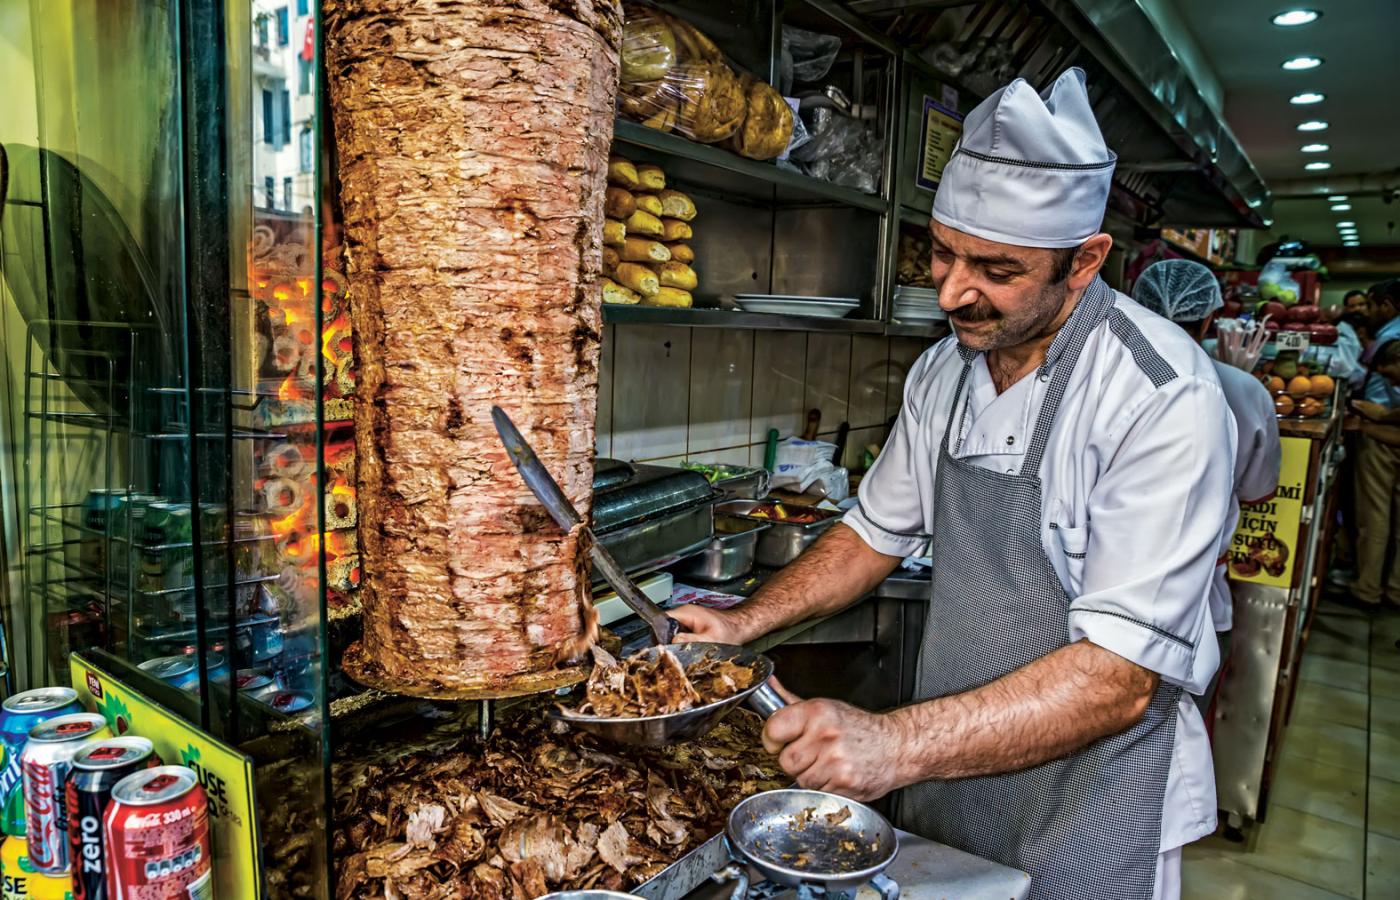 Turecki döner kebab na pionowym szpikulcu